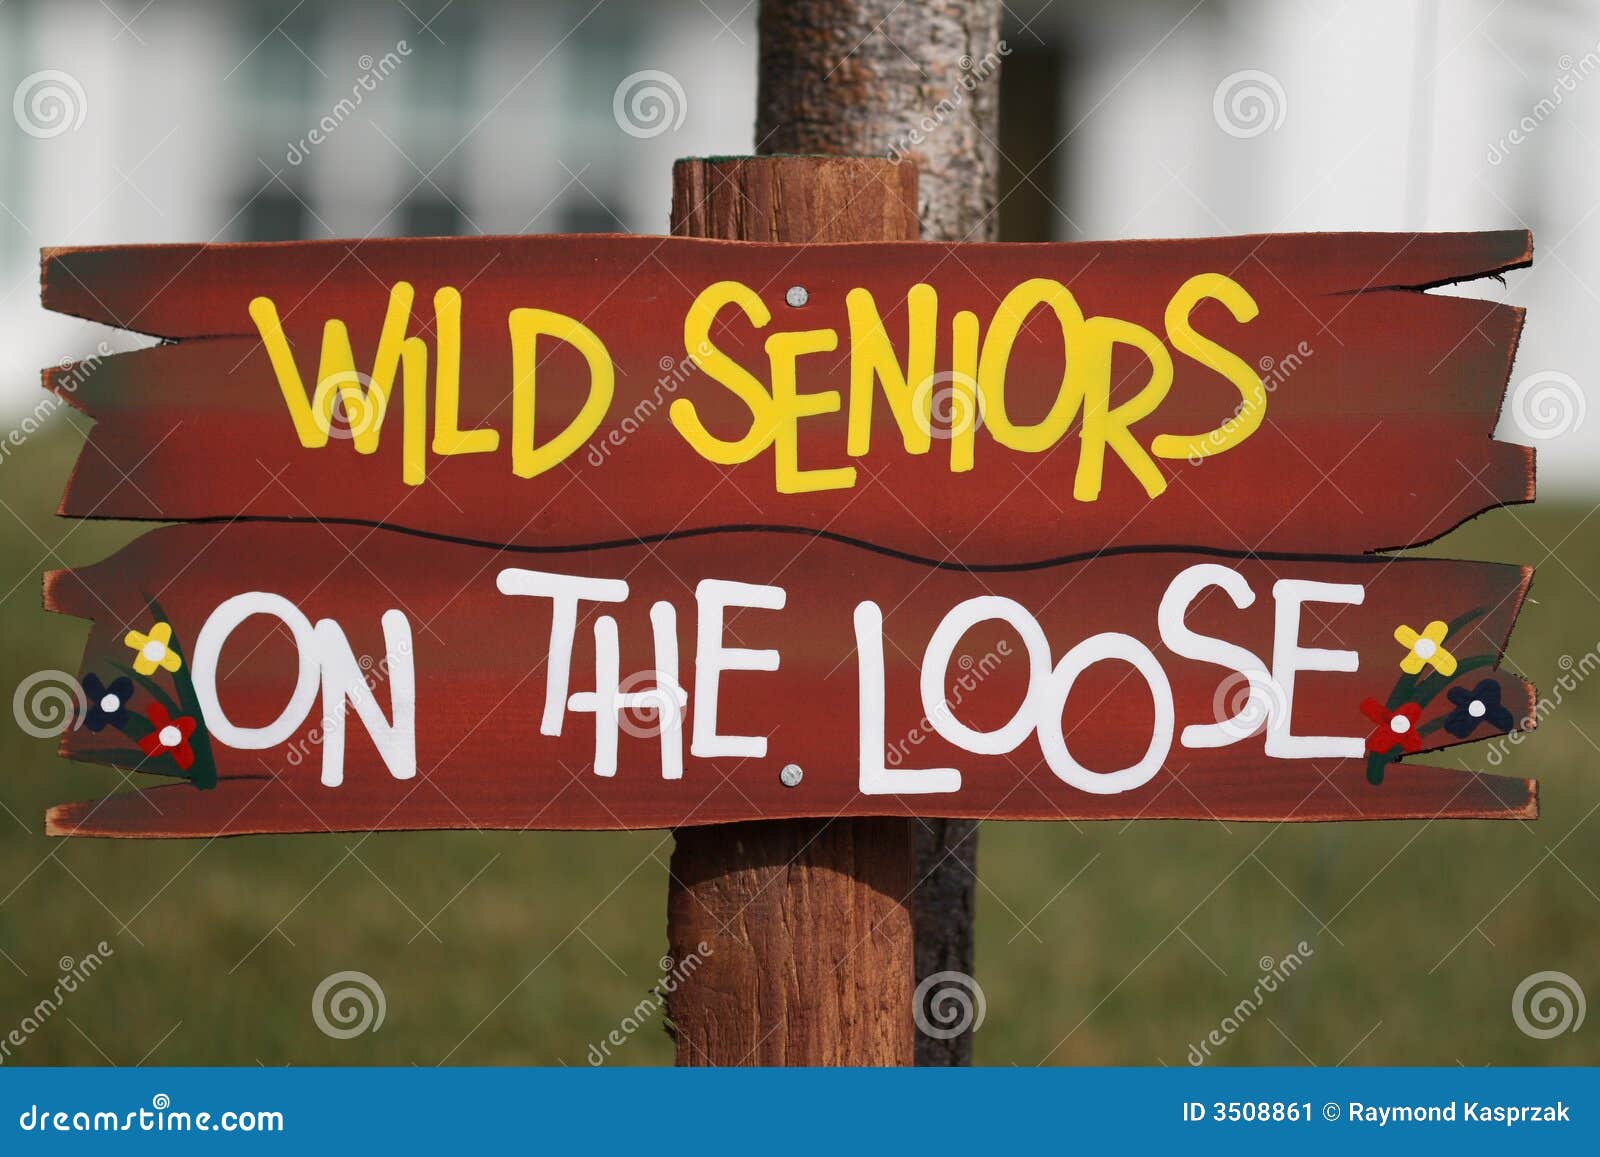 wild seniors on the loose